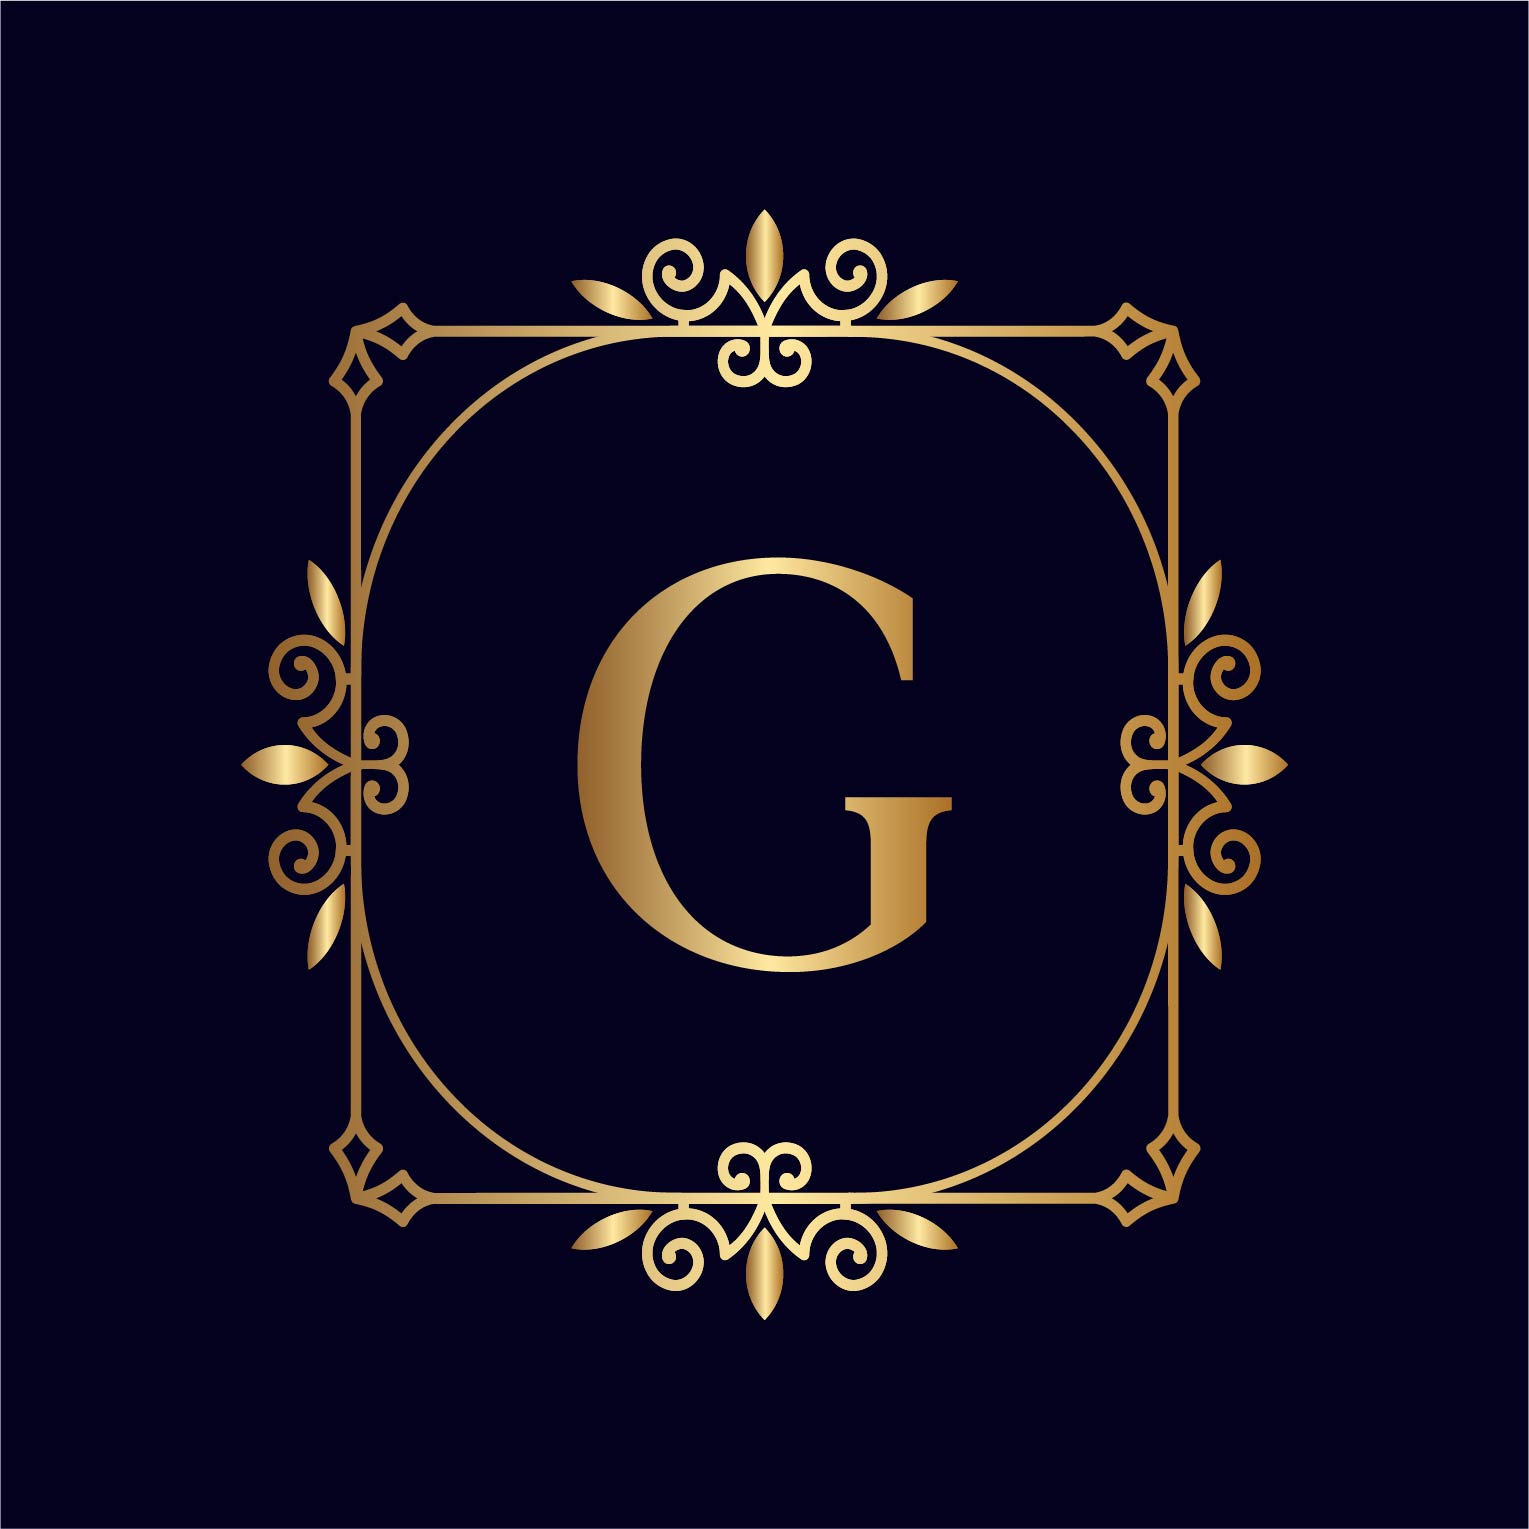 Artistic Gold Letter G Logos Design preview image.